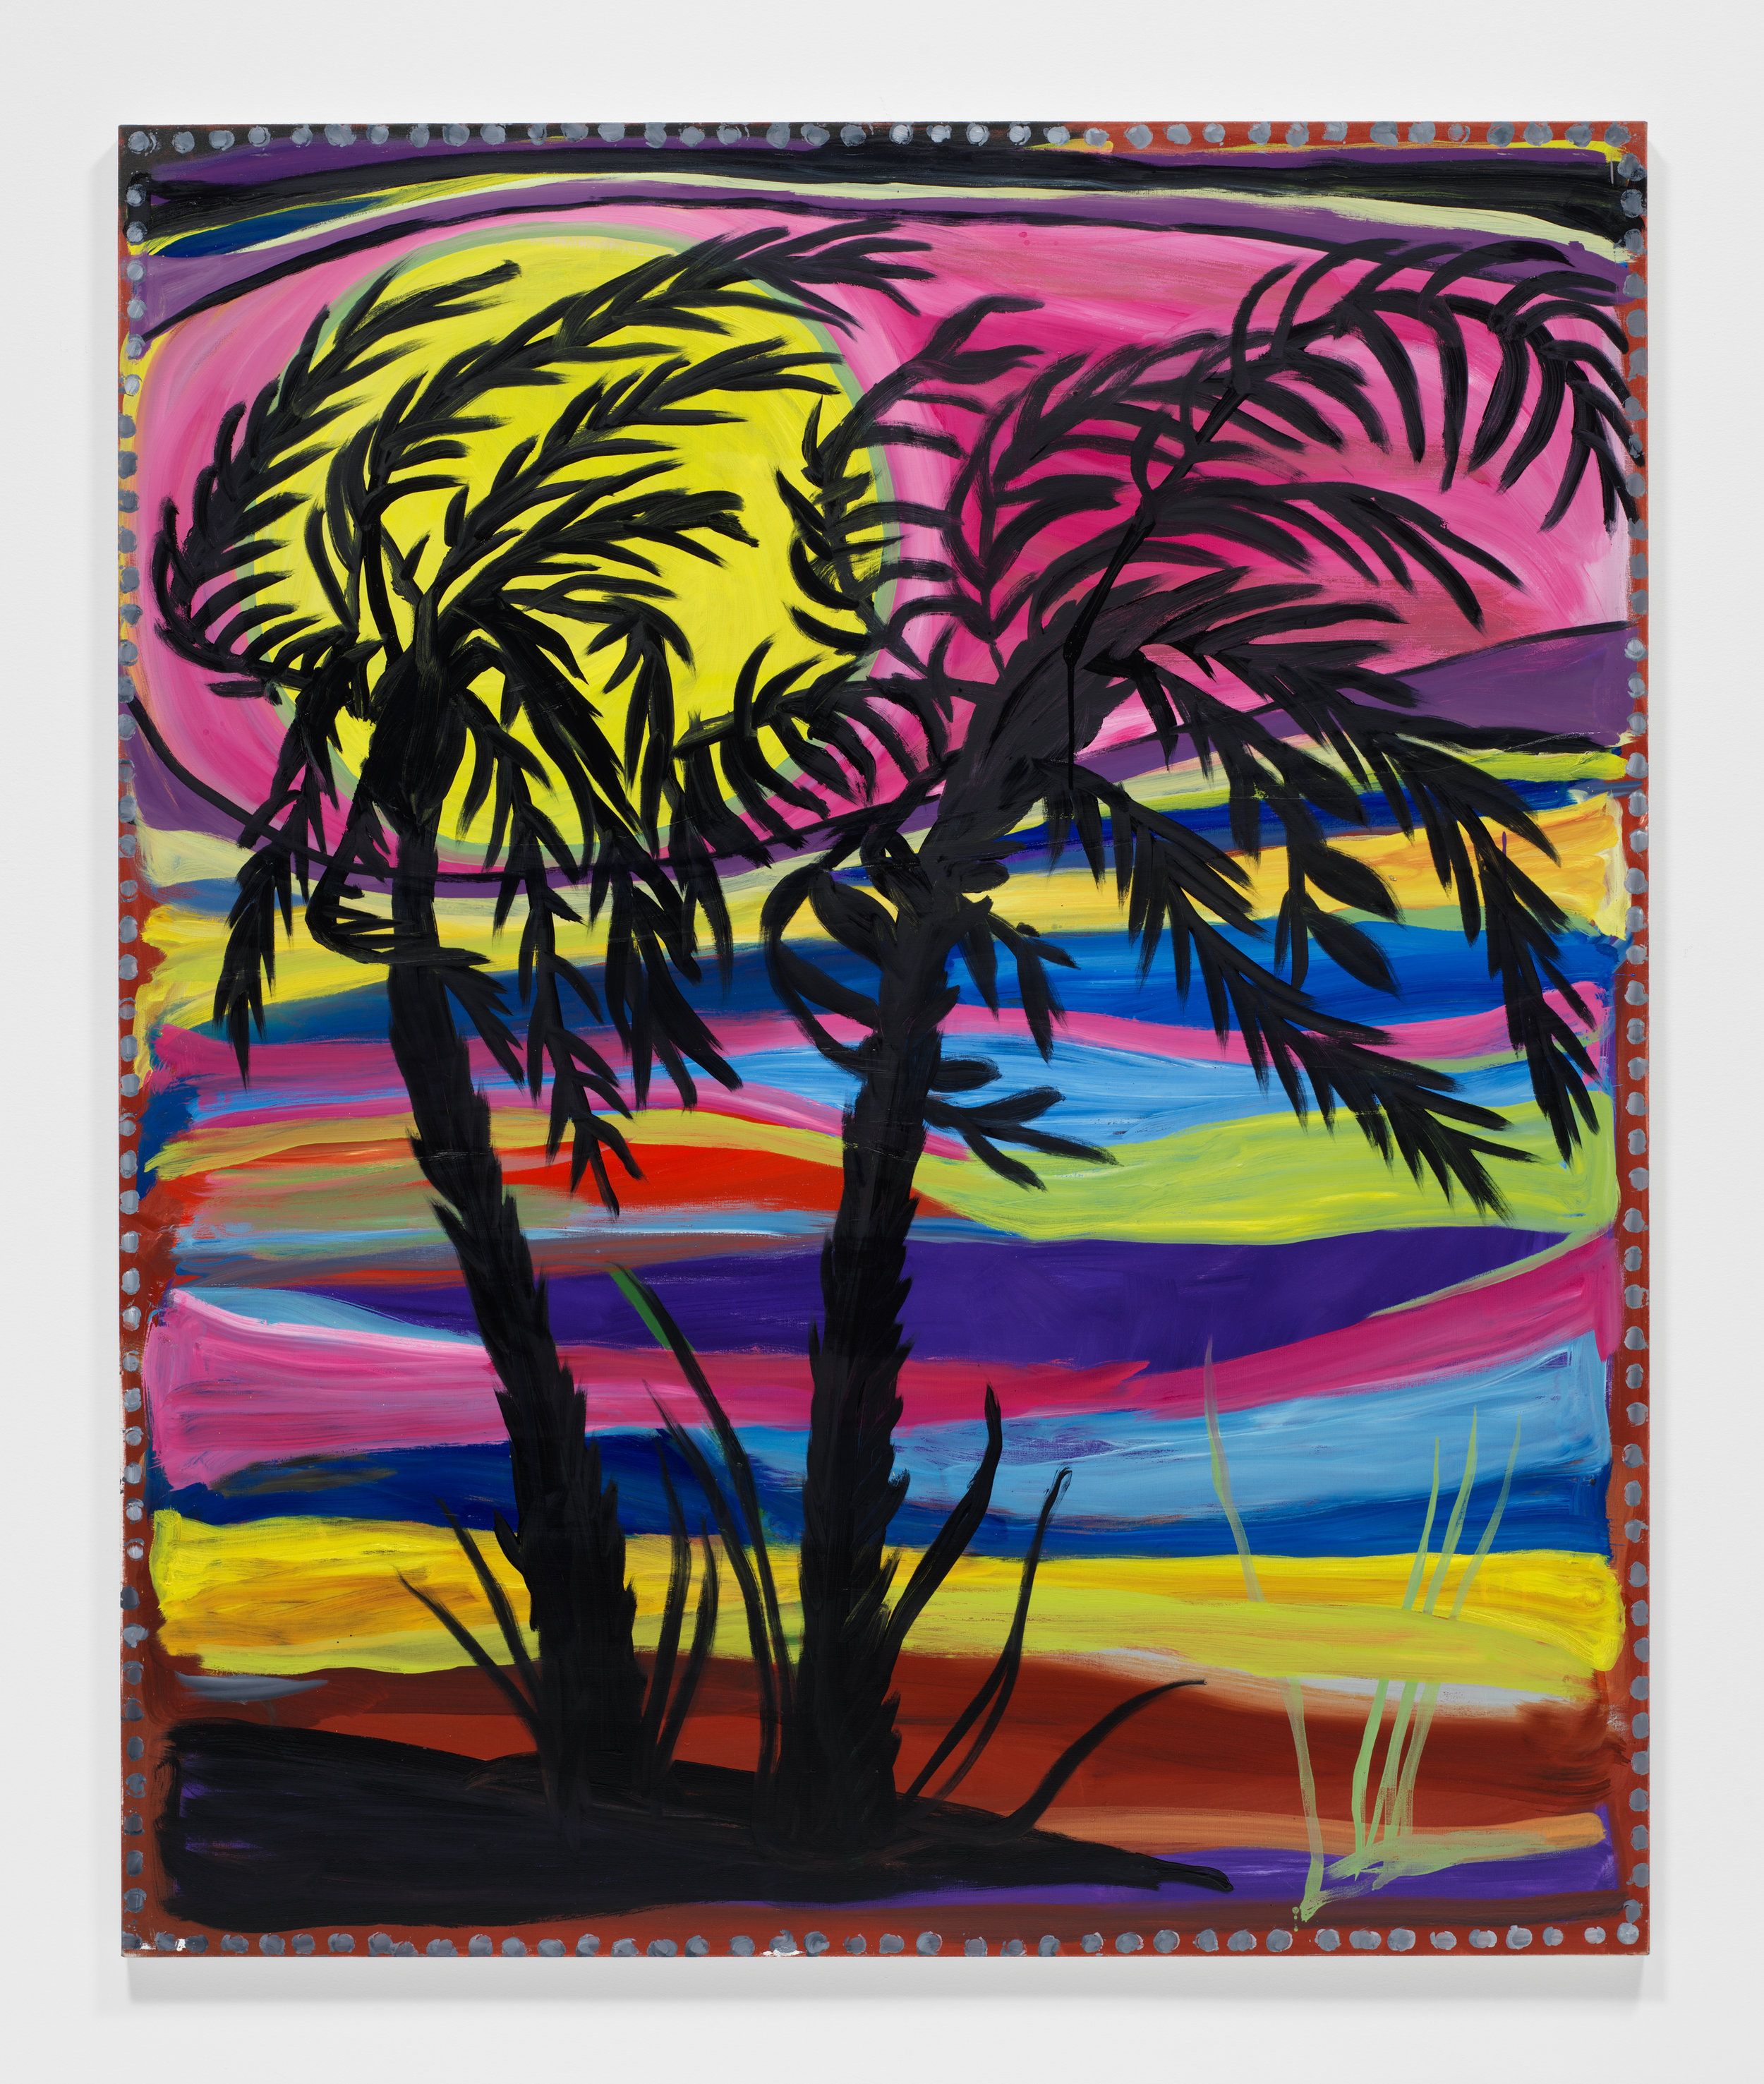   Josh Smith,   Palms #1 ,  2019, Oil on linen, 72 x 60 inches, 182.9 x 152.4 cm 